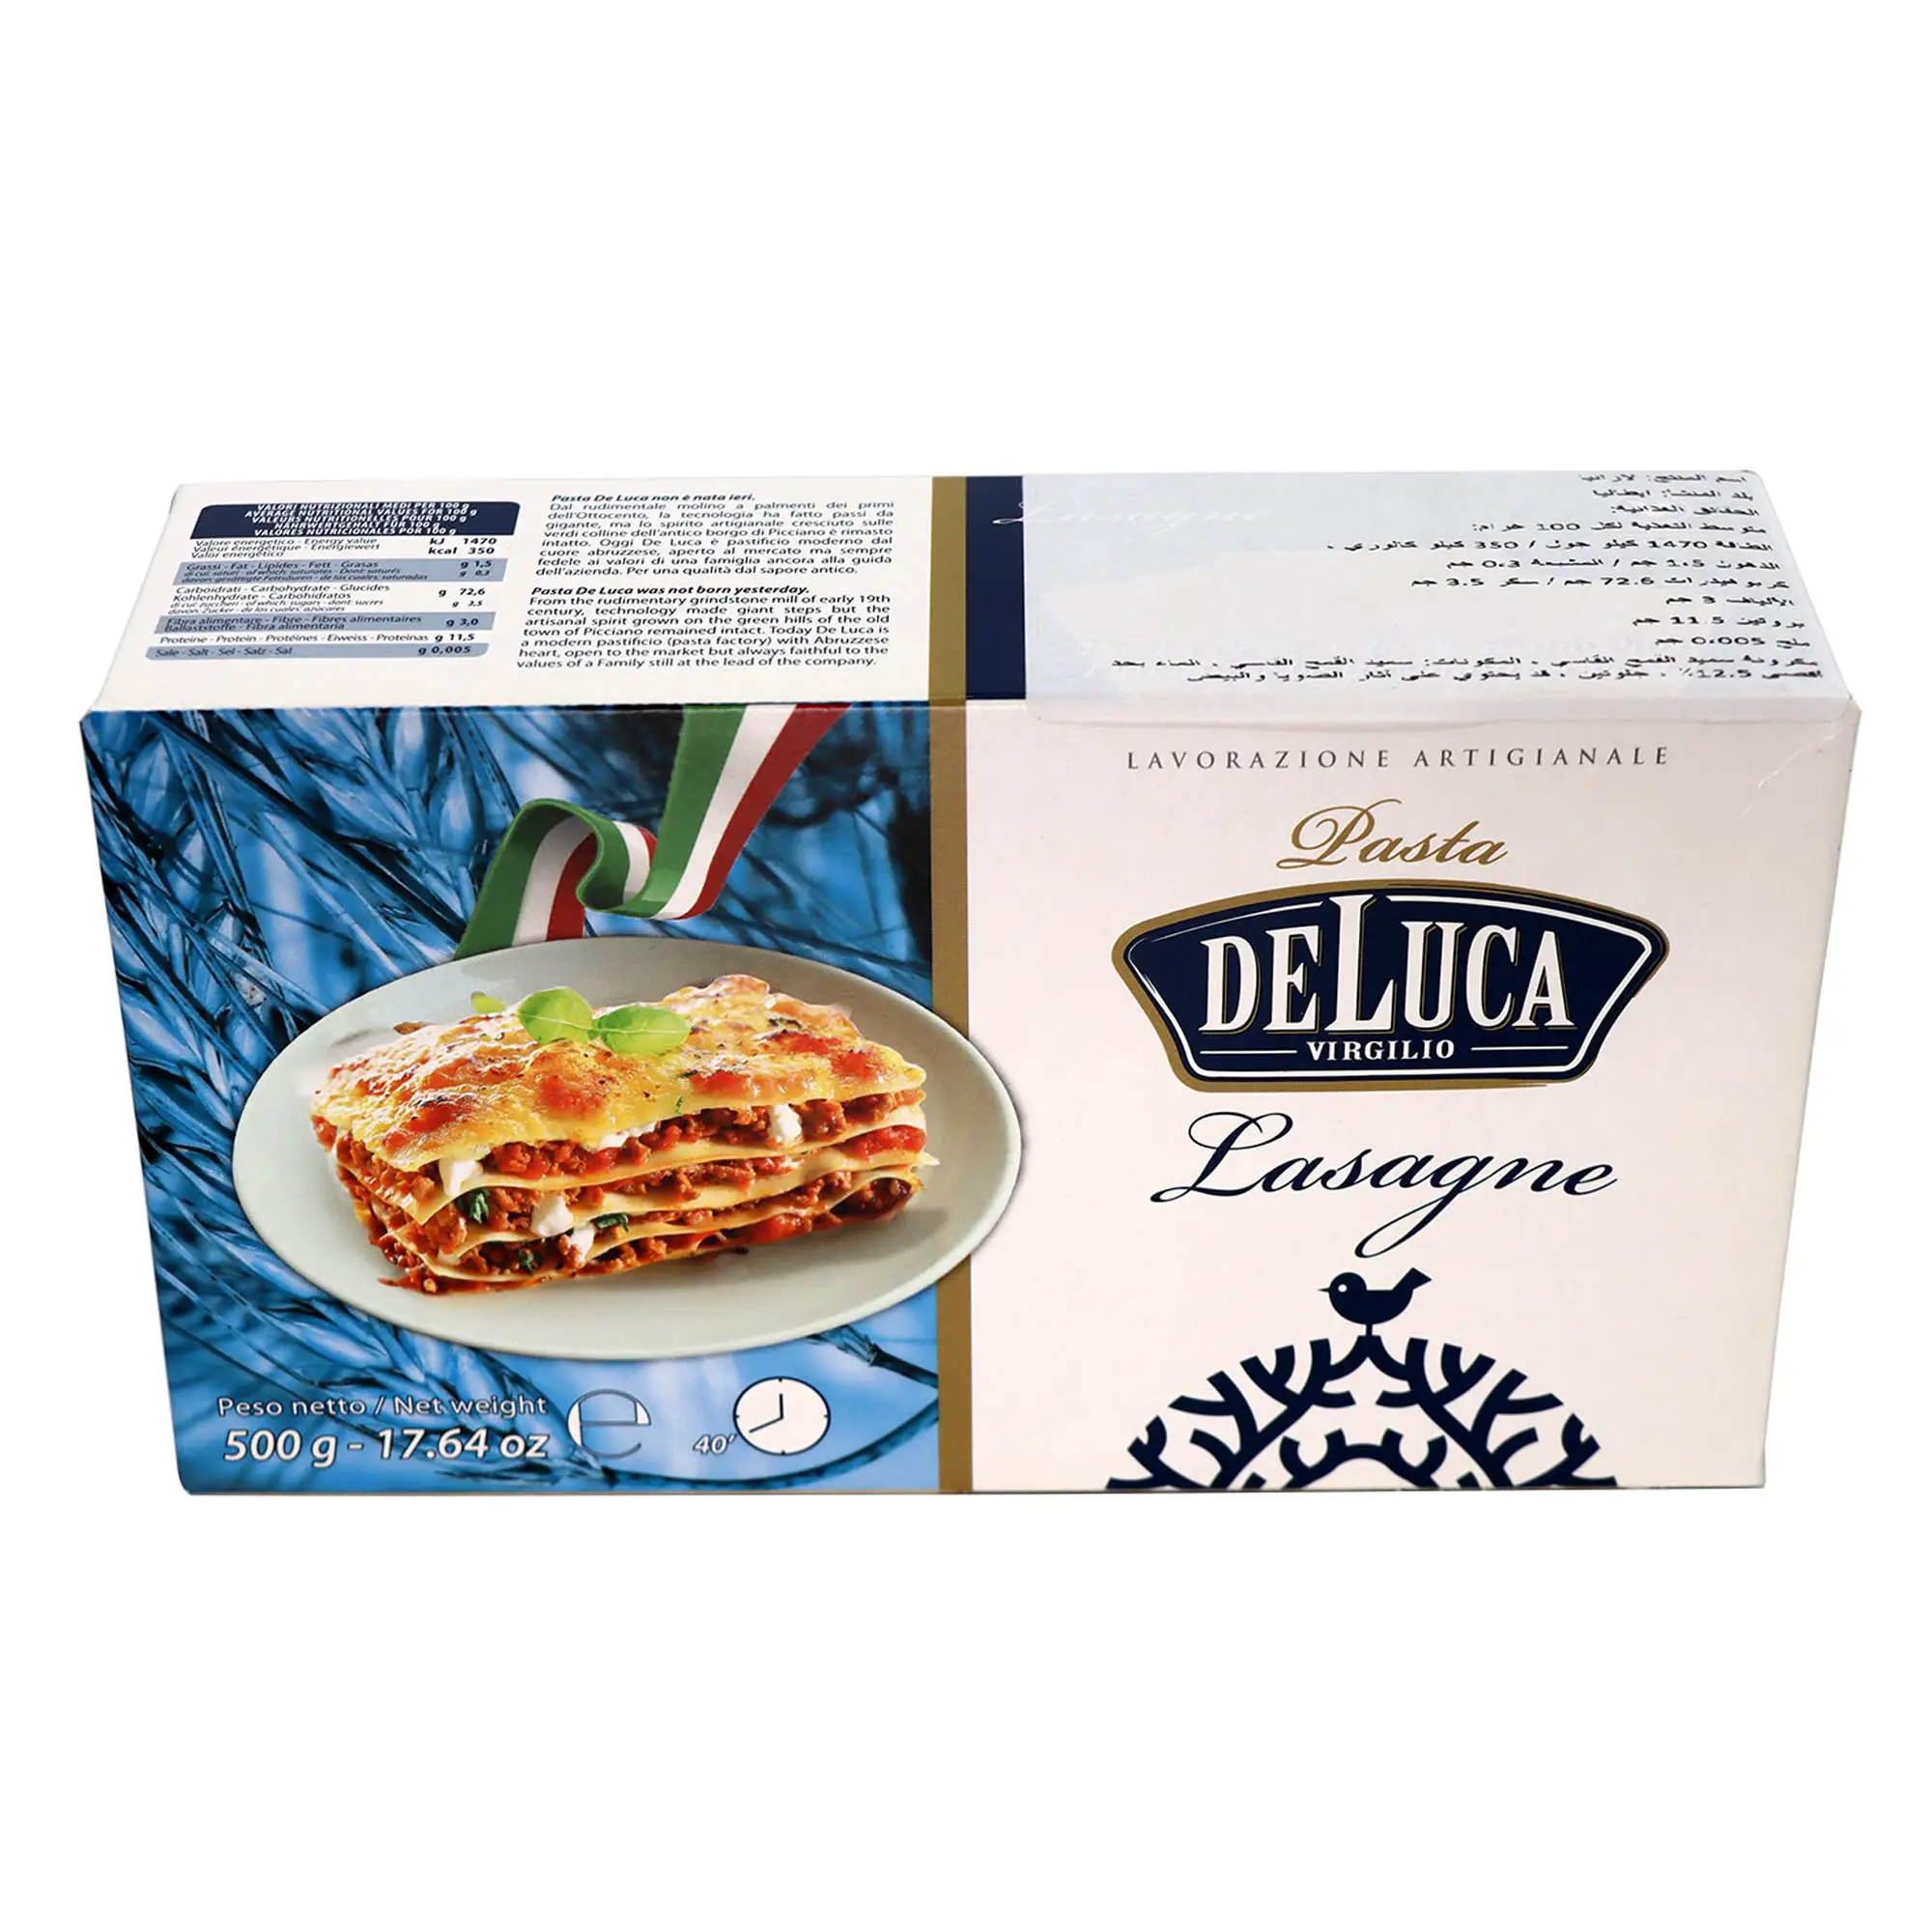 KAC -Deluca lasagna pasta 500 g